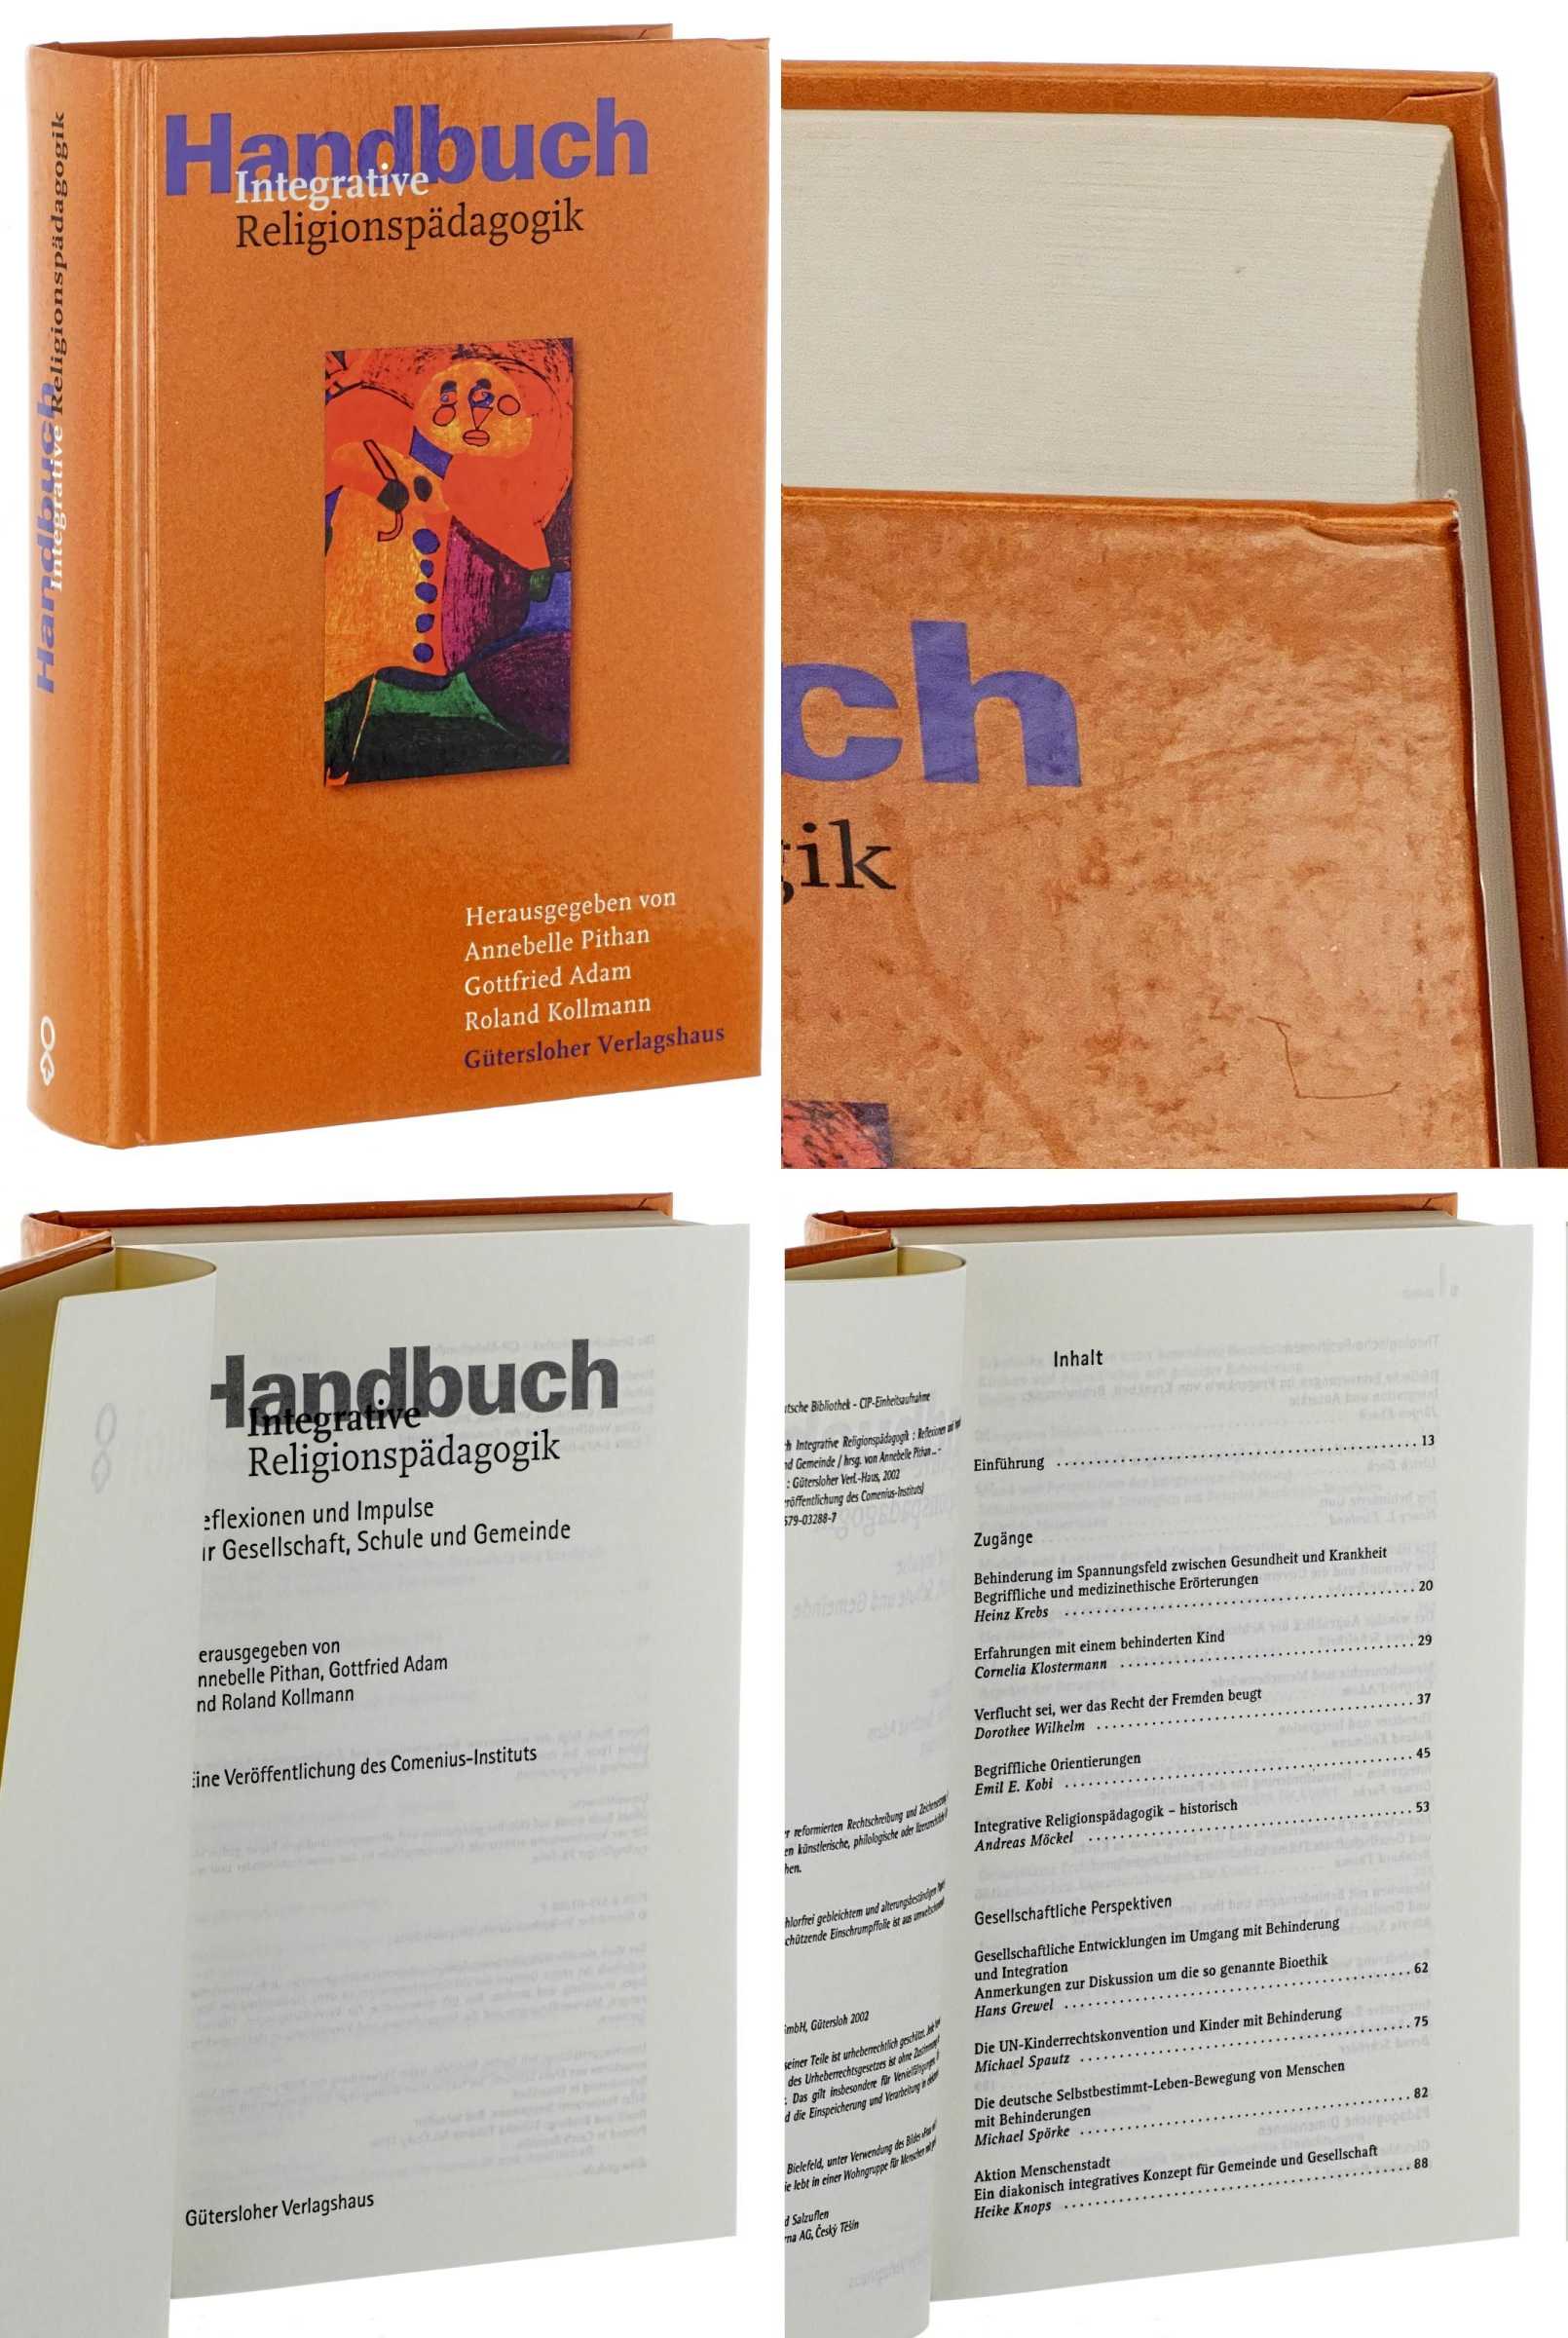   Handbuch integrative Religionspädagogik. Hrsg. von Annebelle Pithan, Gottfried Adam, Robert Kollmann. 